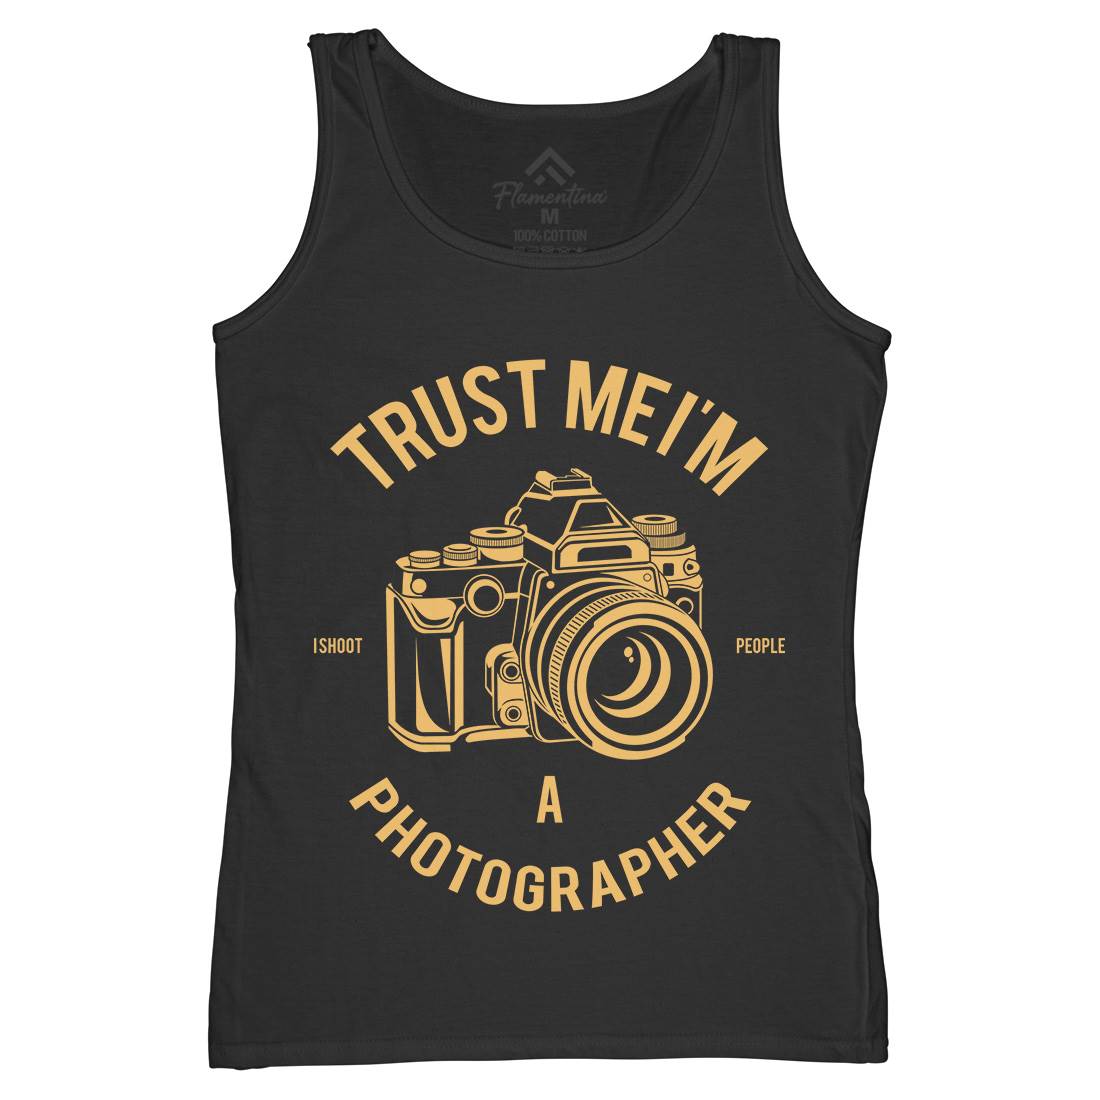 Photographer Womens Organic Tank Top Vest Media A110